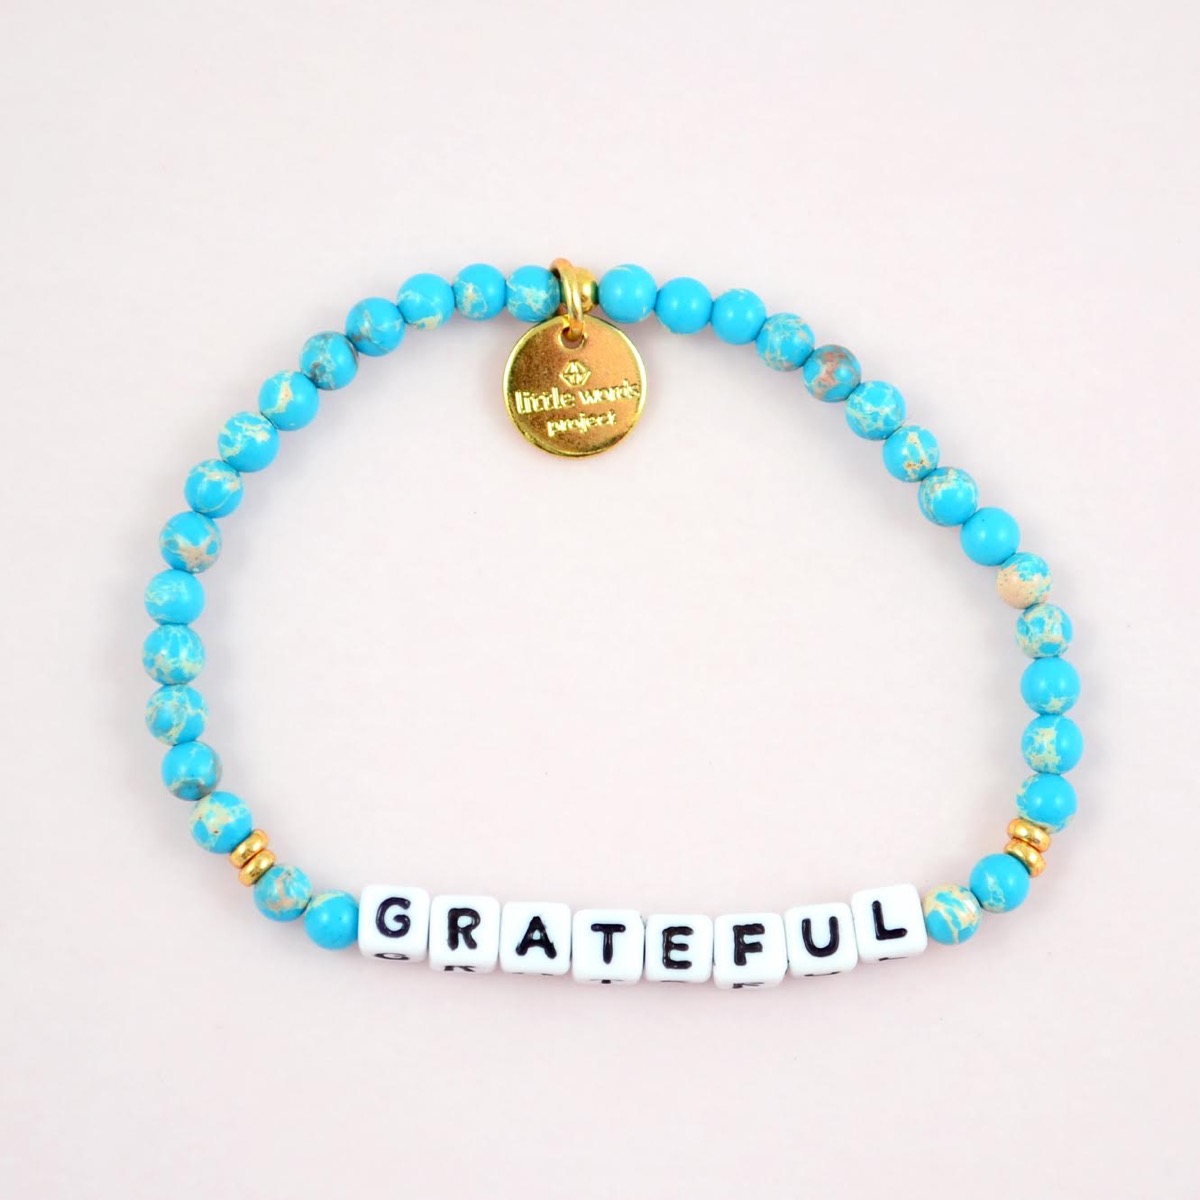 blue bracelet with grateful on it, little words project